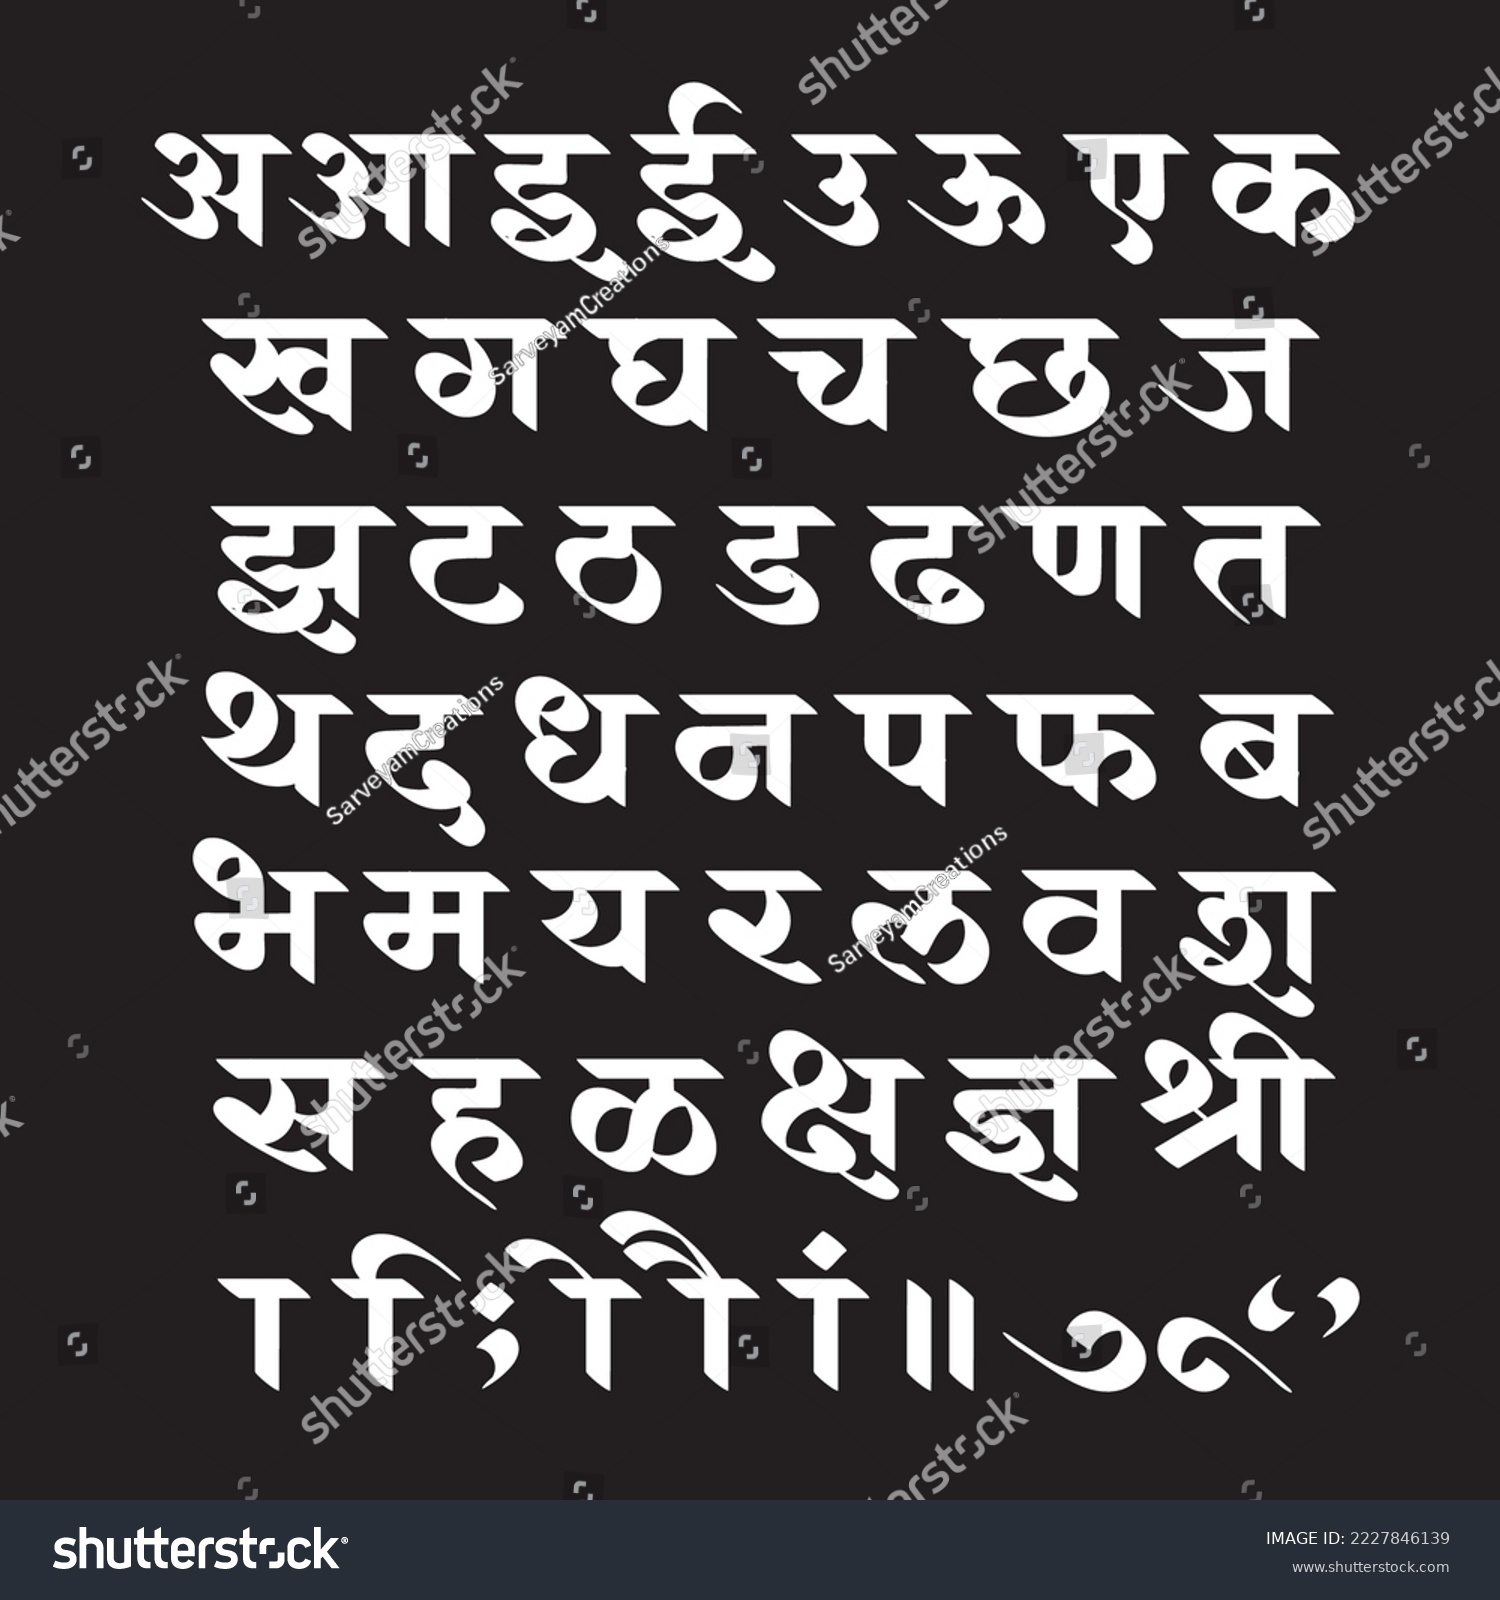 SVG of Handlettering Devanagari font for Indian languages Hindi and Marathi means alphabets svg